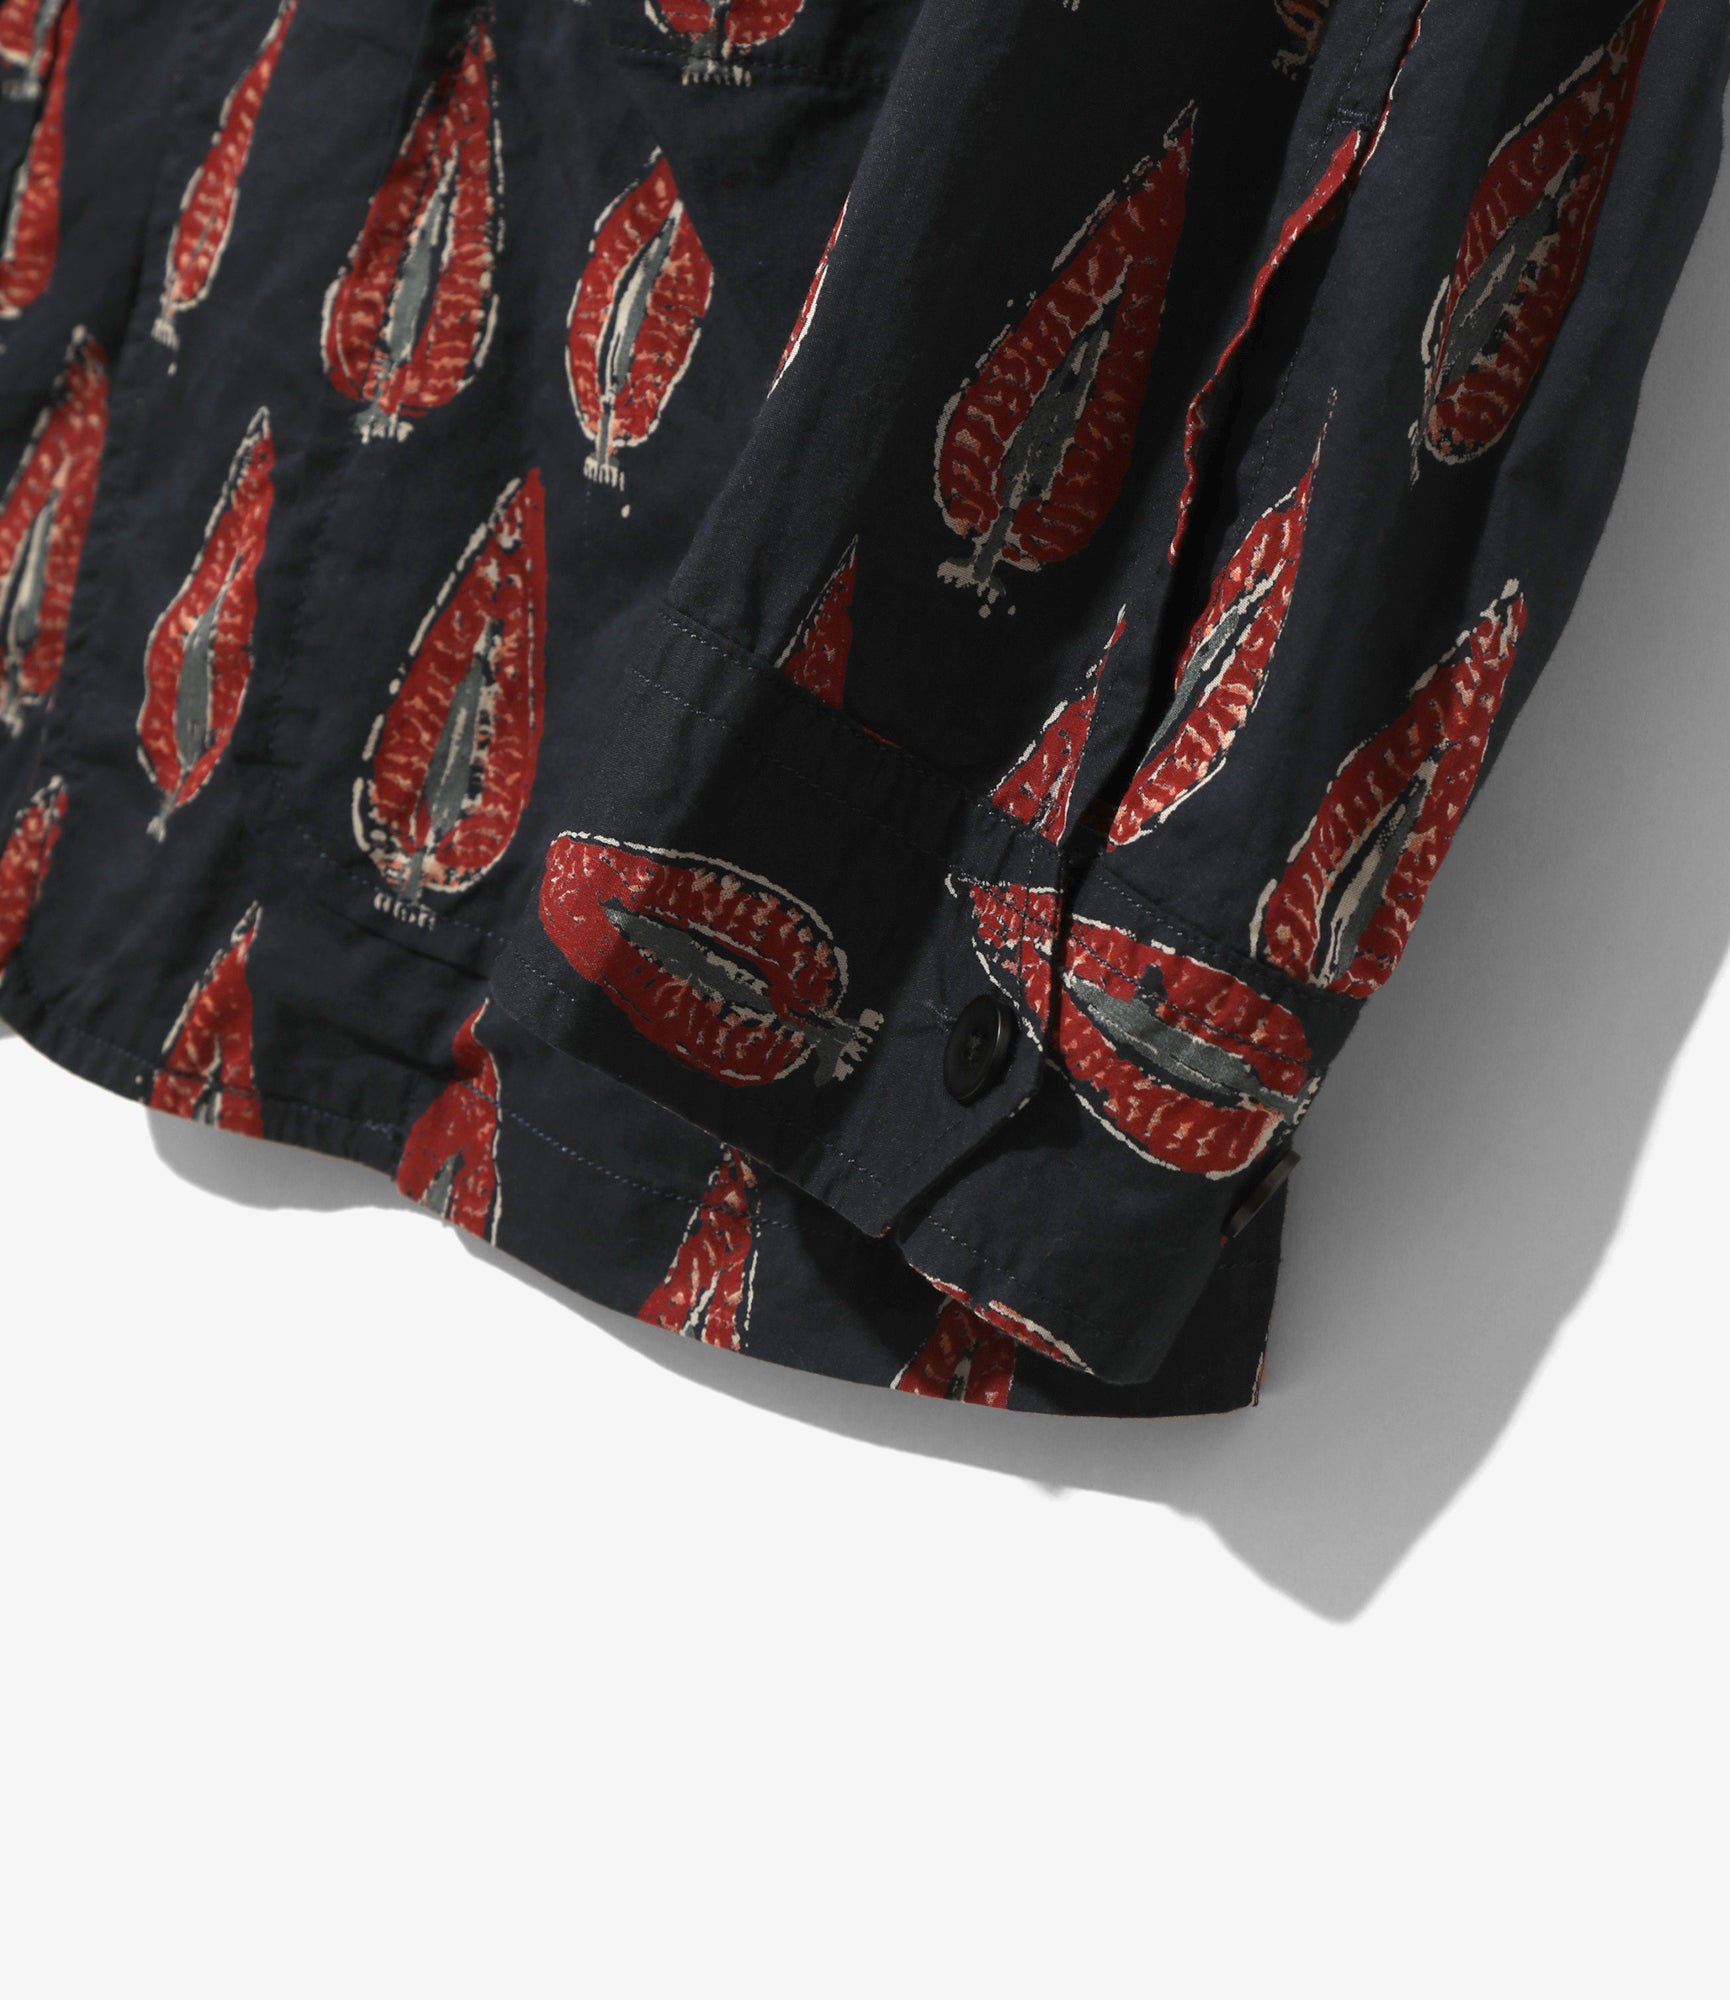 South2 West8 Pen Jacket - Cotton Cloth / Batik Printed - Navy